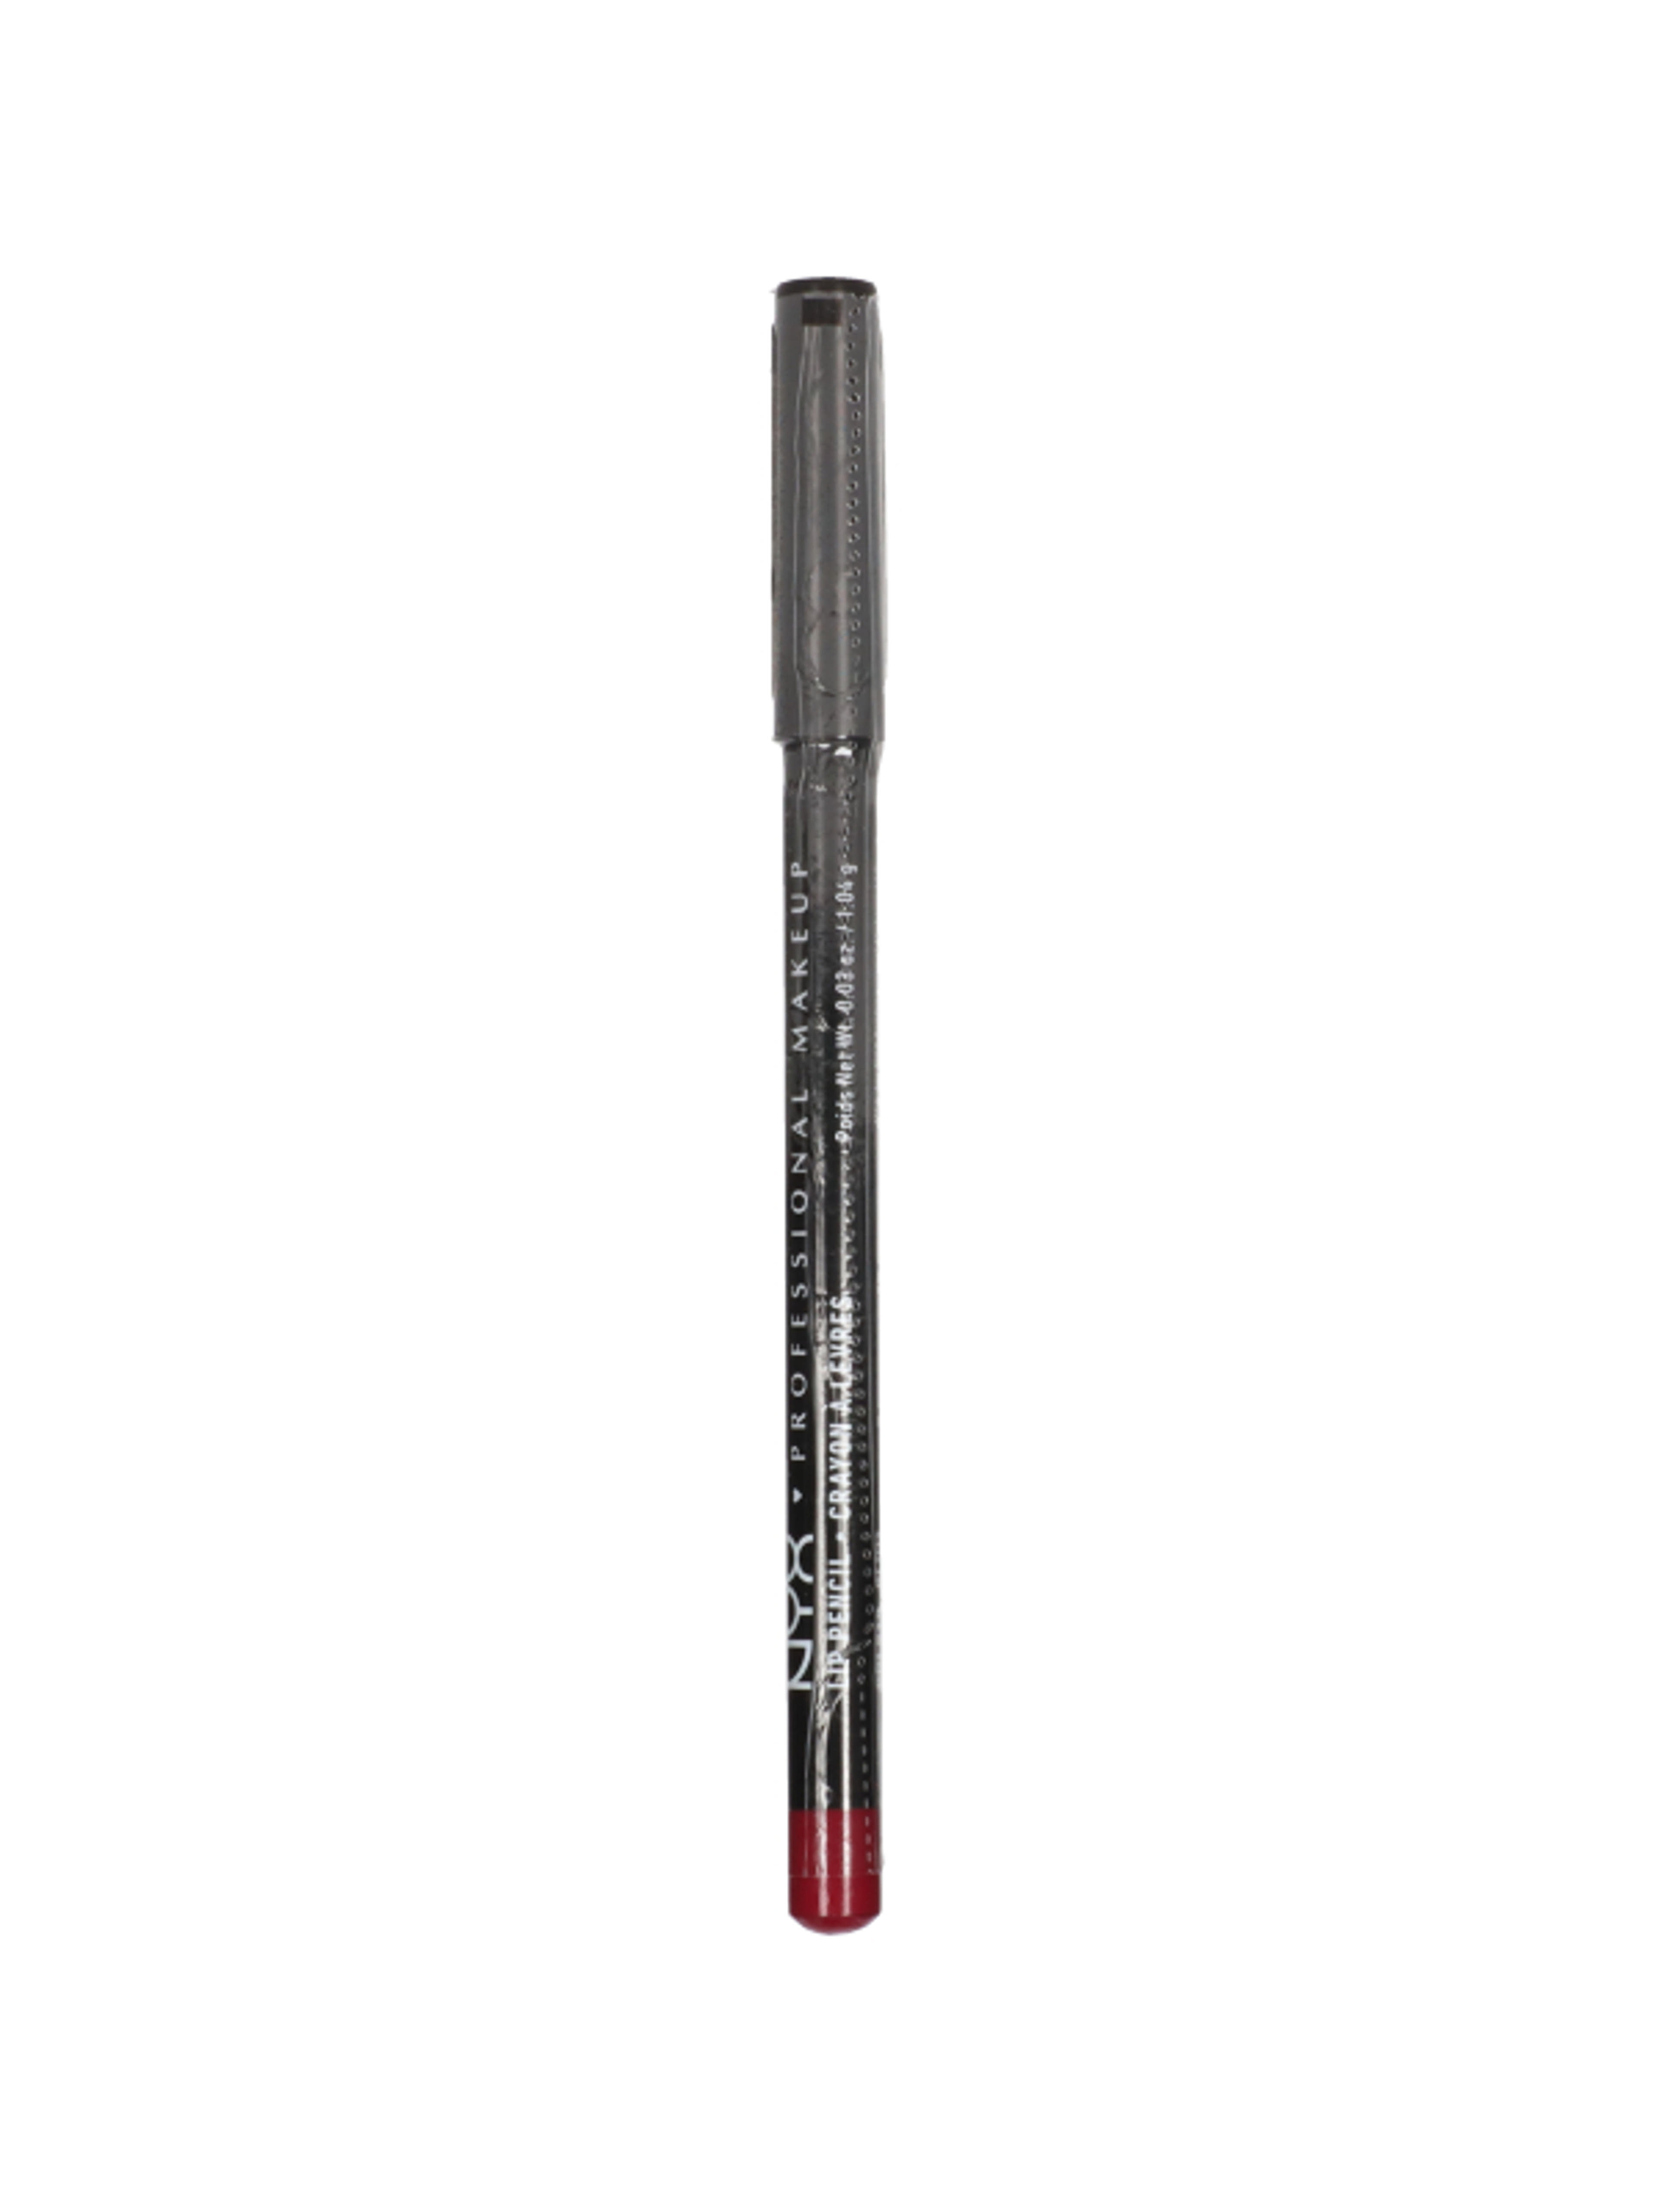 NYX Professional Makeup Slim Lip Pencil ajakkontúr ceruza, Plum - 1 db-5